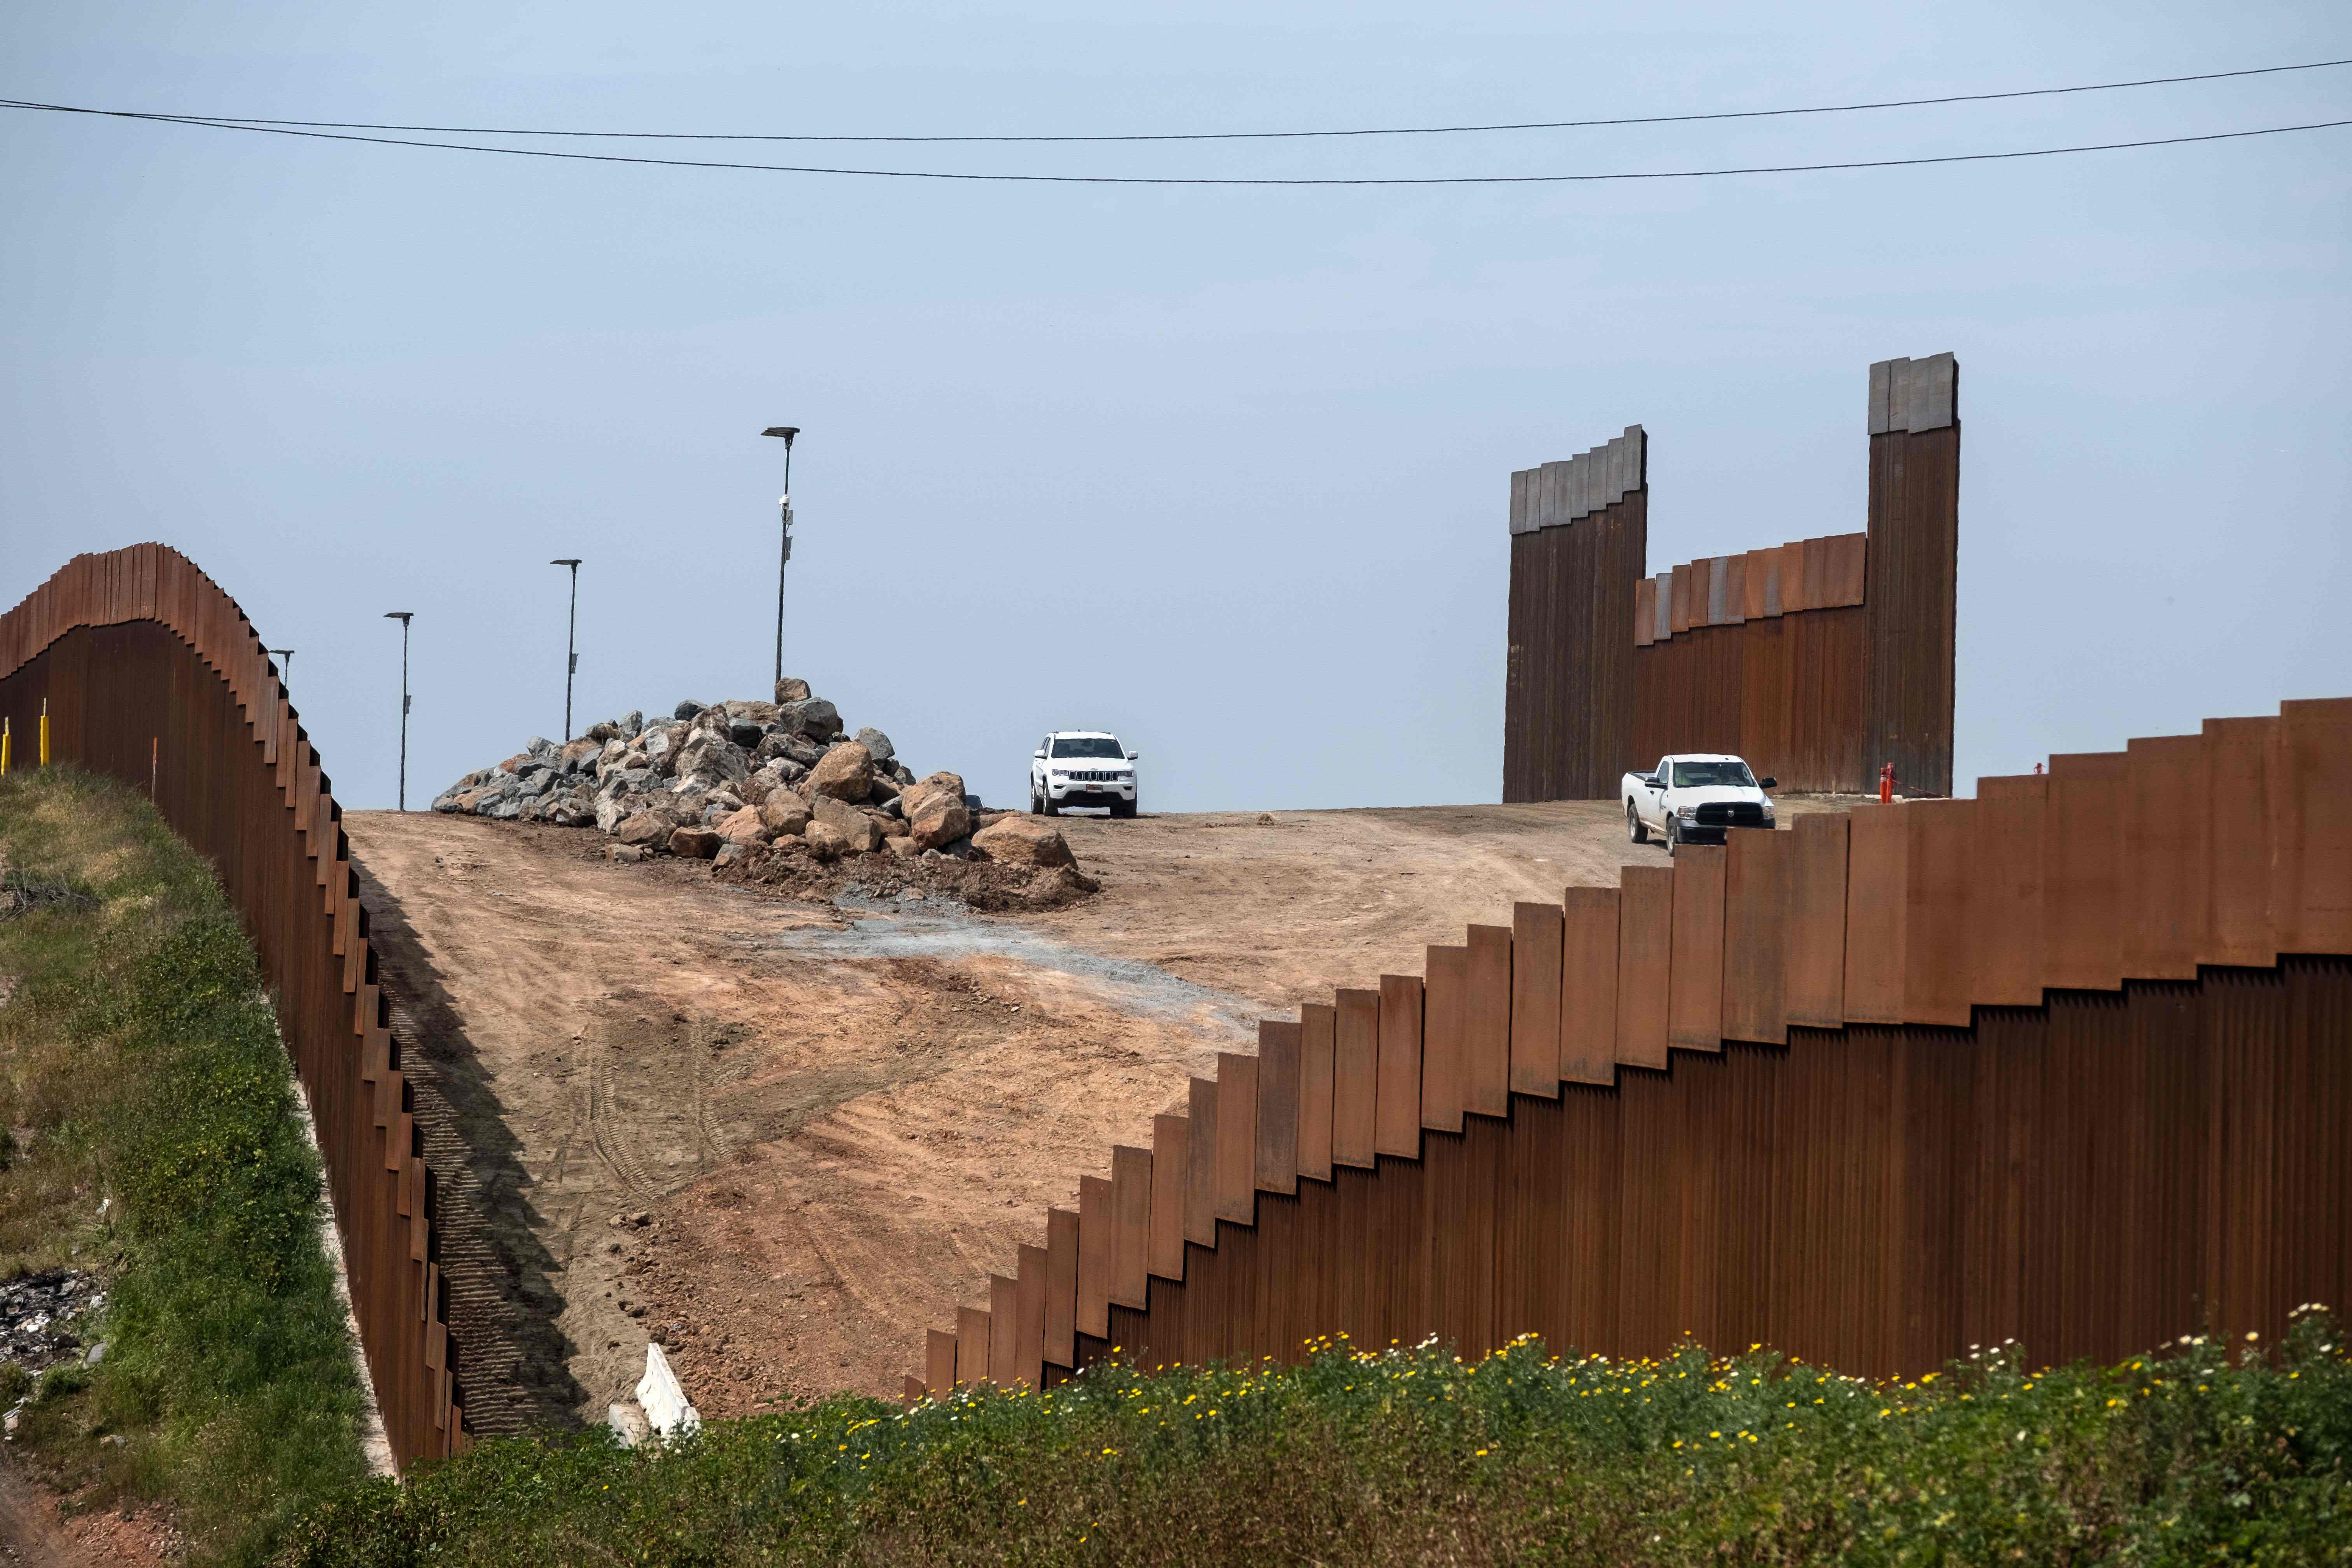 Agentes patrullan cerca del muro fronterizo, en Tijuana, Baja California. (Foto Prensa Libre: Hemeroteca PL)